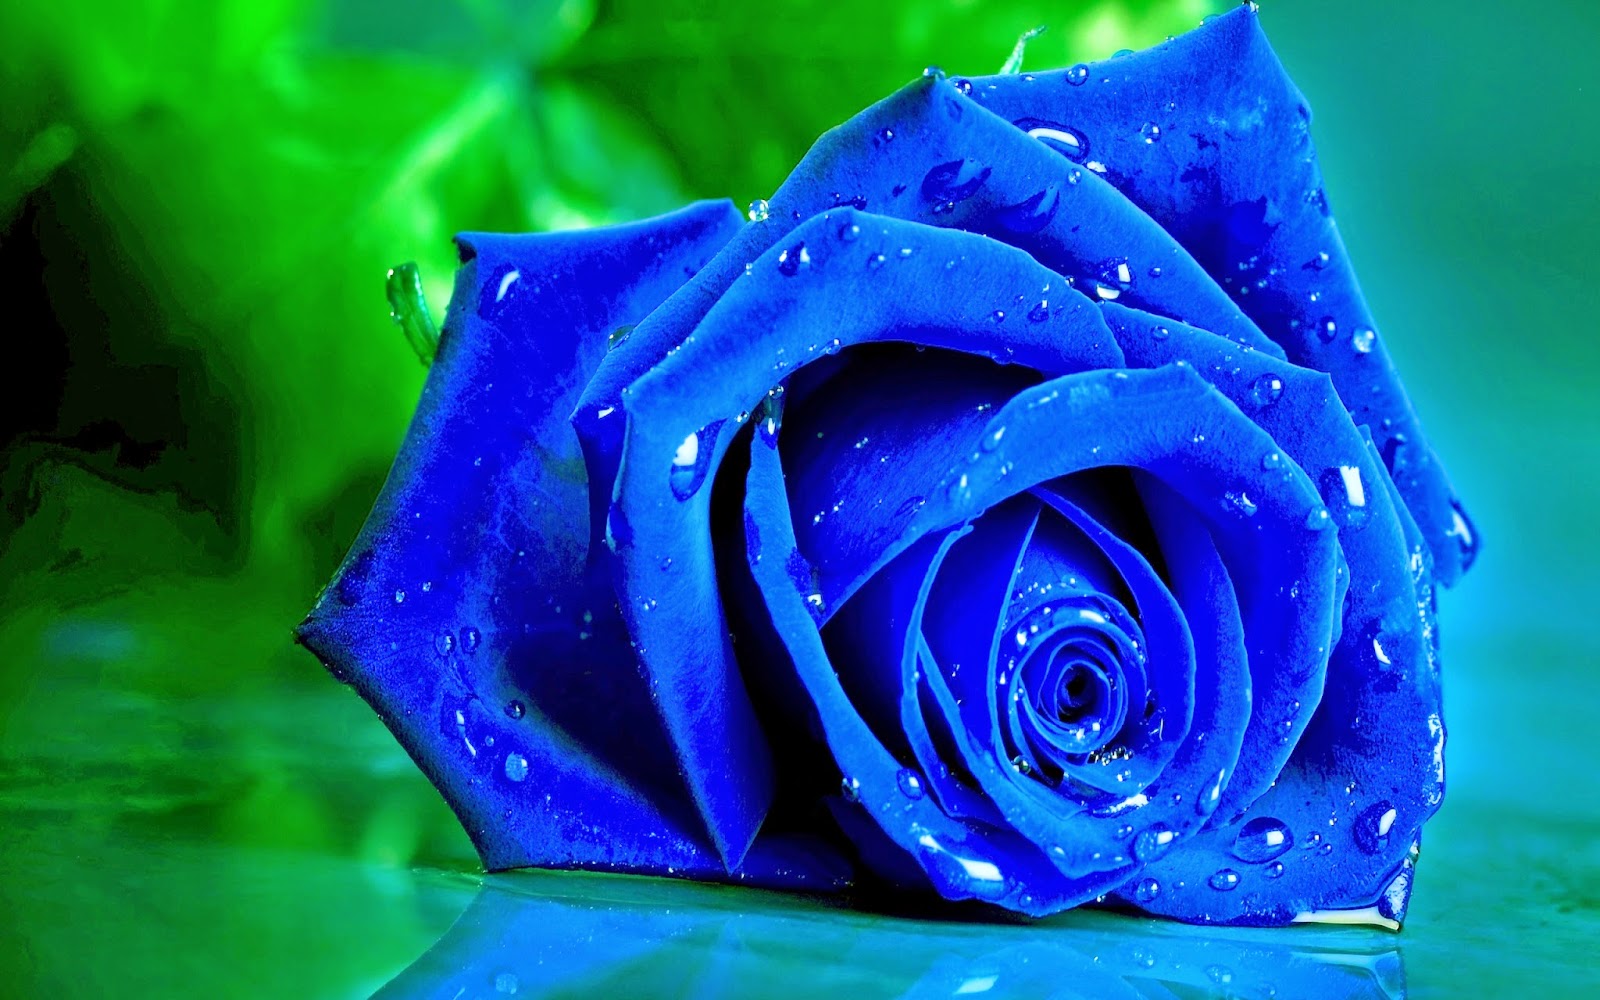 Evergreen and Indigo: The Blue Rose